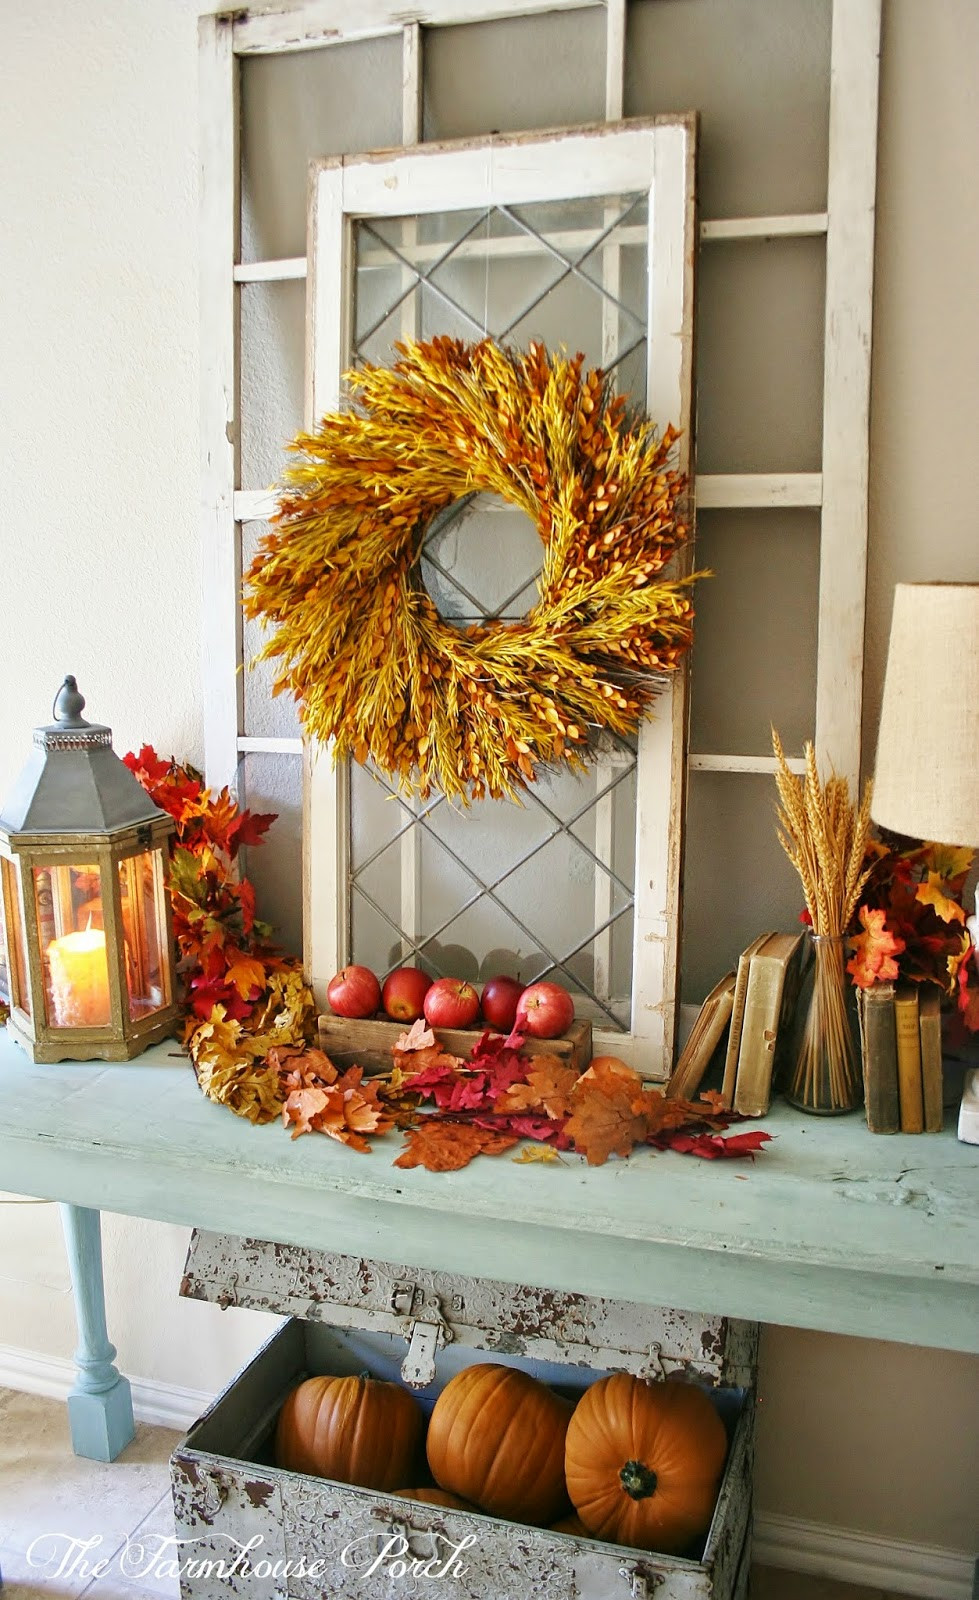 Fall Decorations For Porch
 The Farmhouse Porch